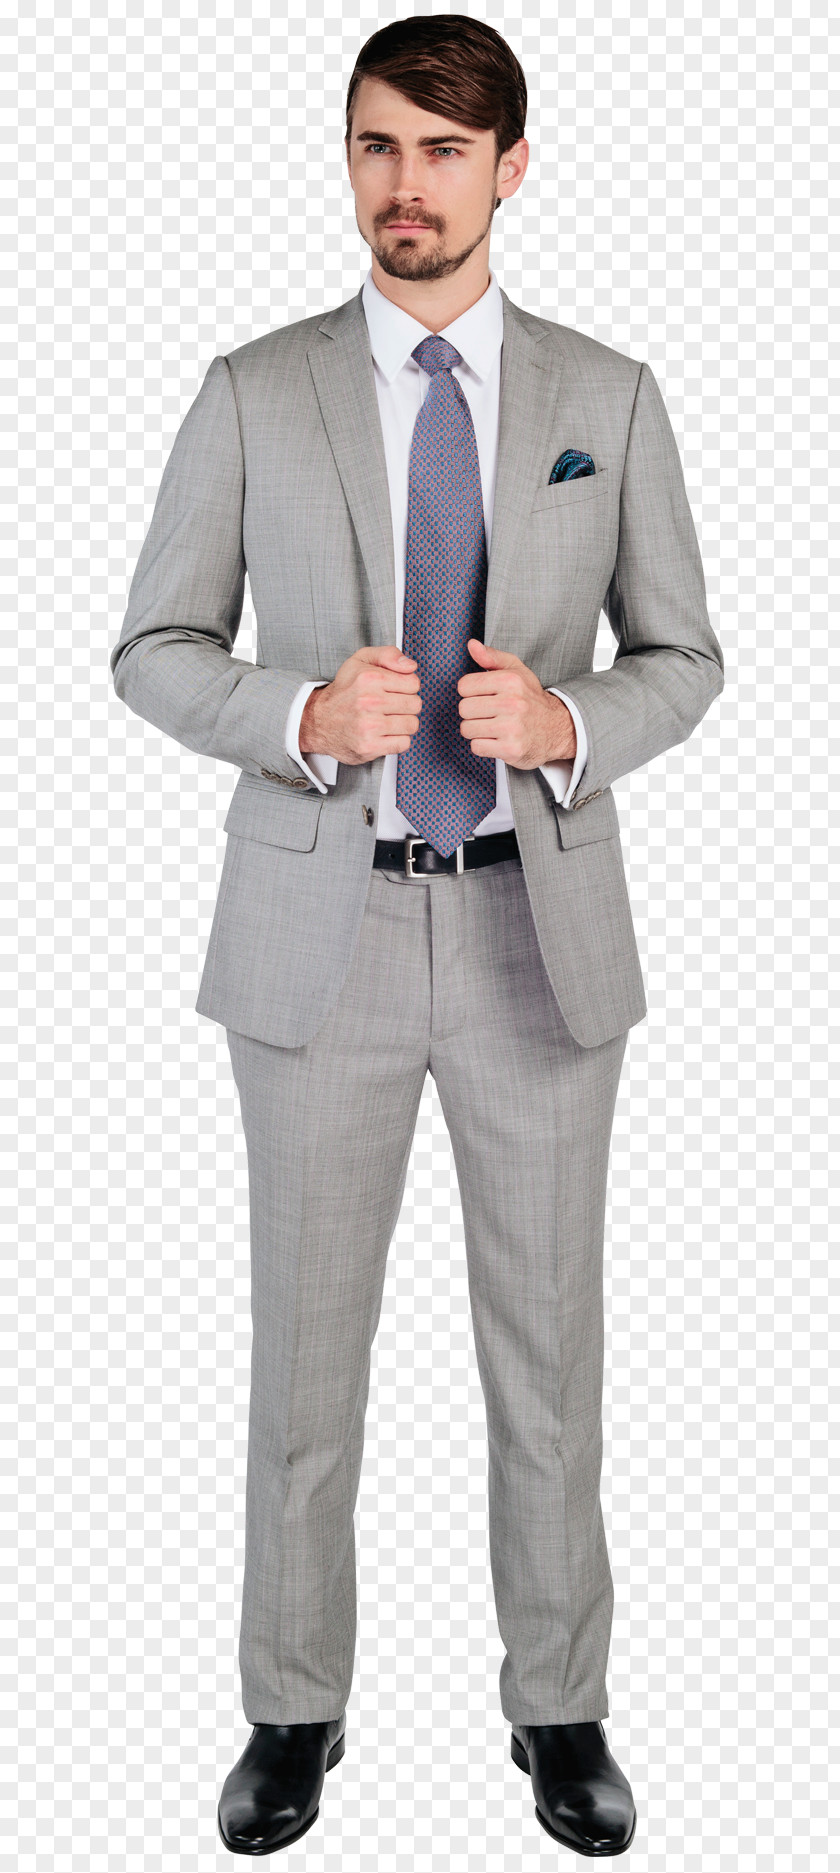 Suit Tuxedo Necktie Formal Wear Businessperson PNG